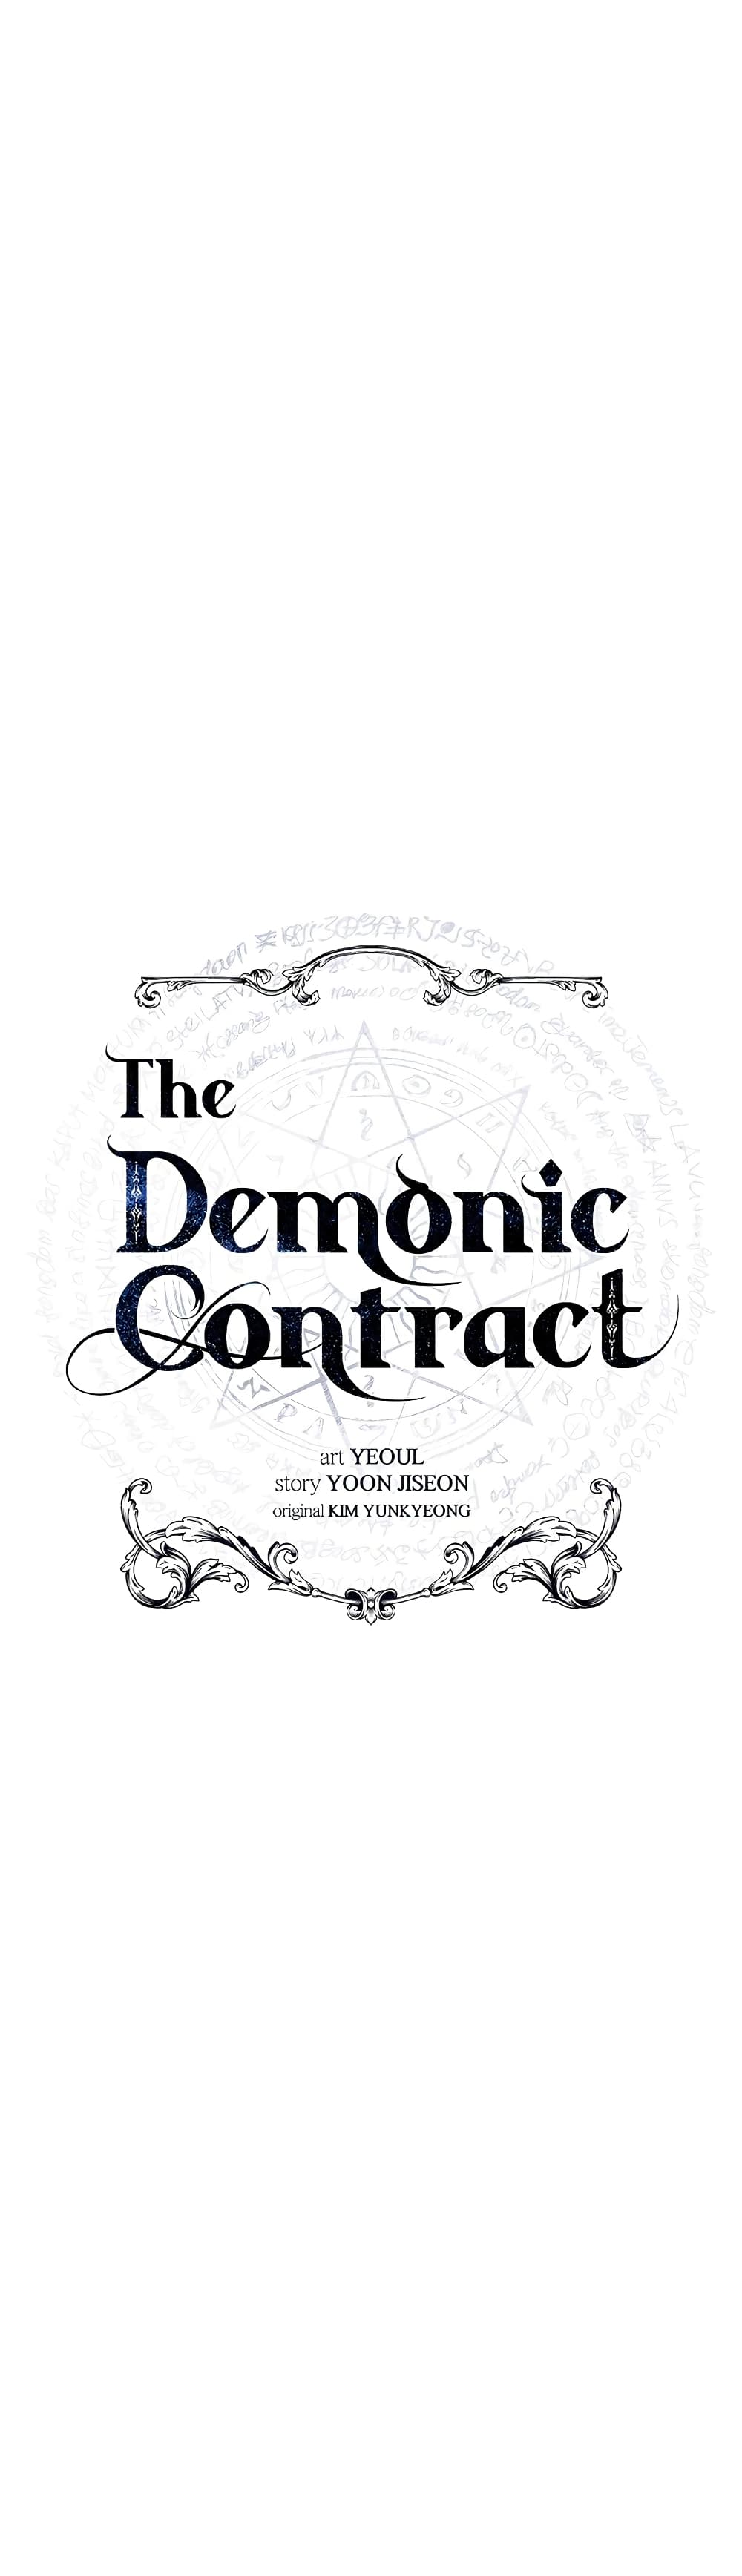 The Demonic Contract 53 (8)